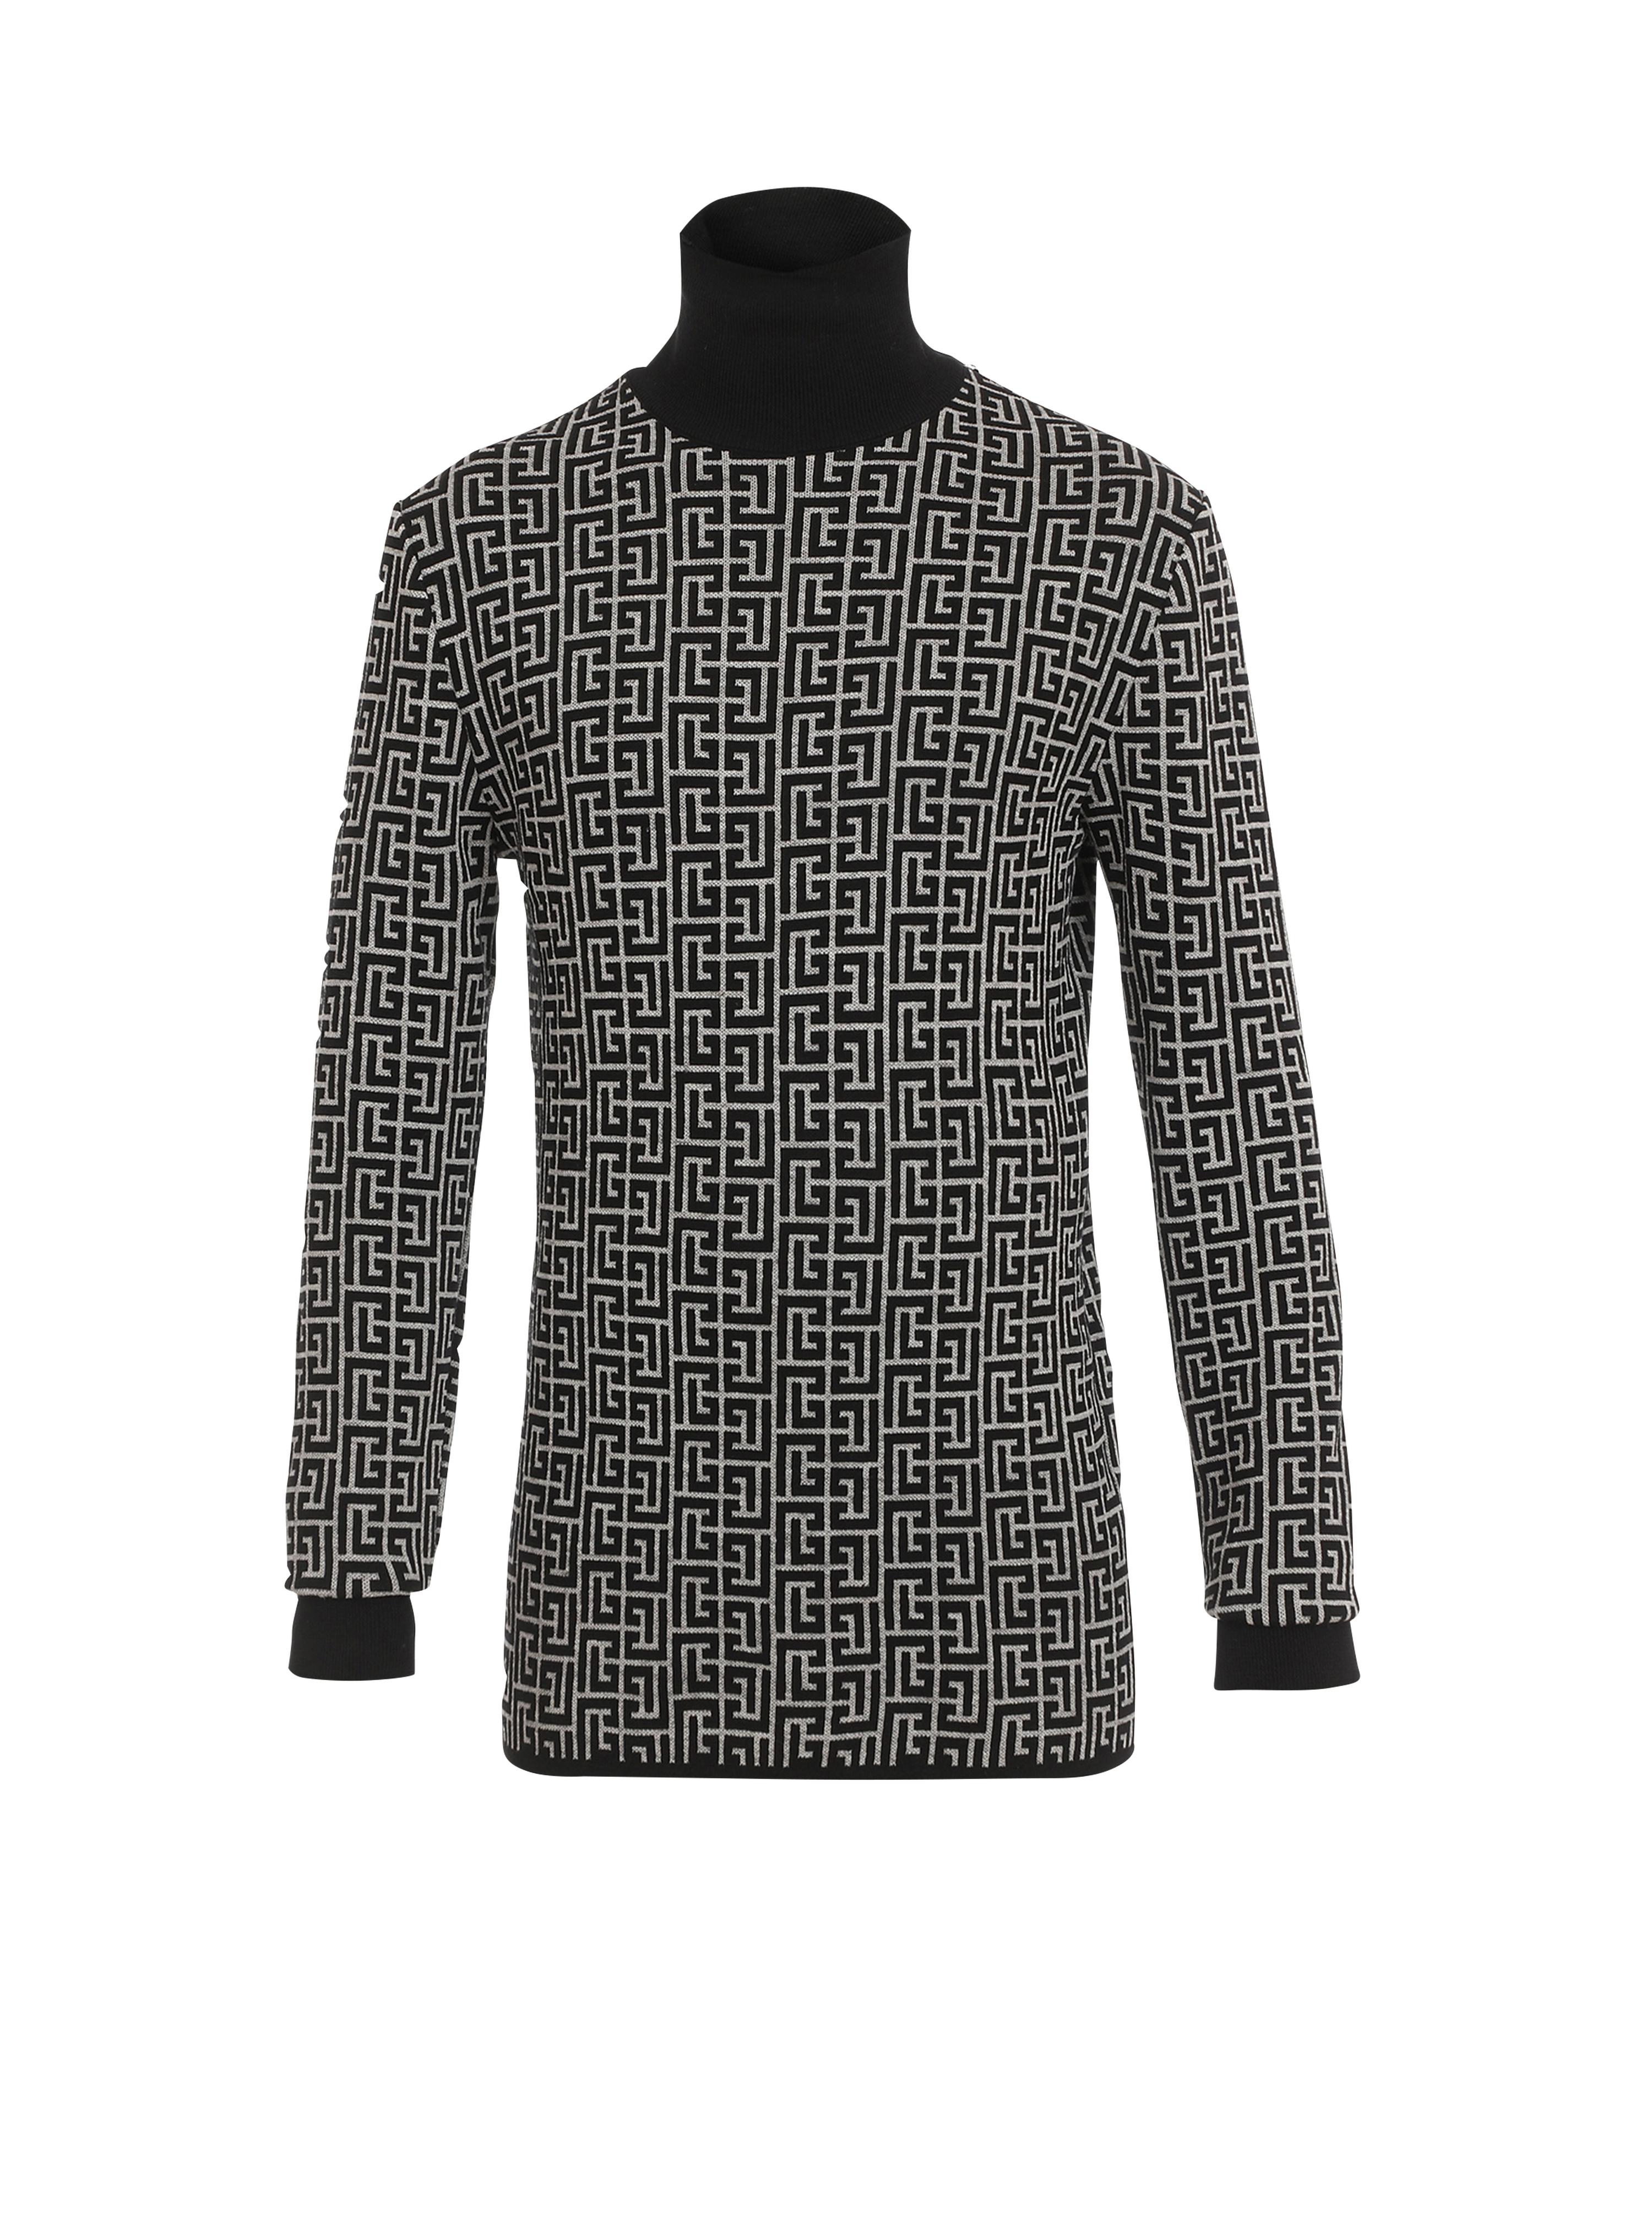 Wool turtleneck sweater, black